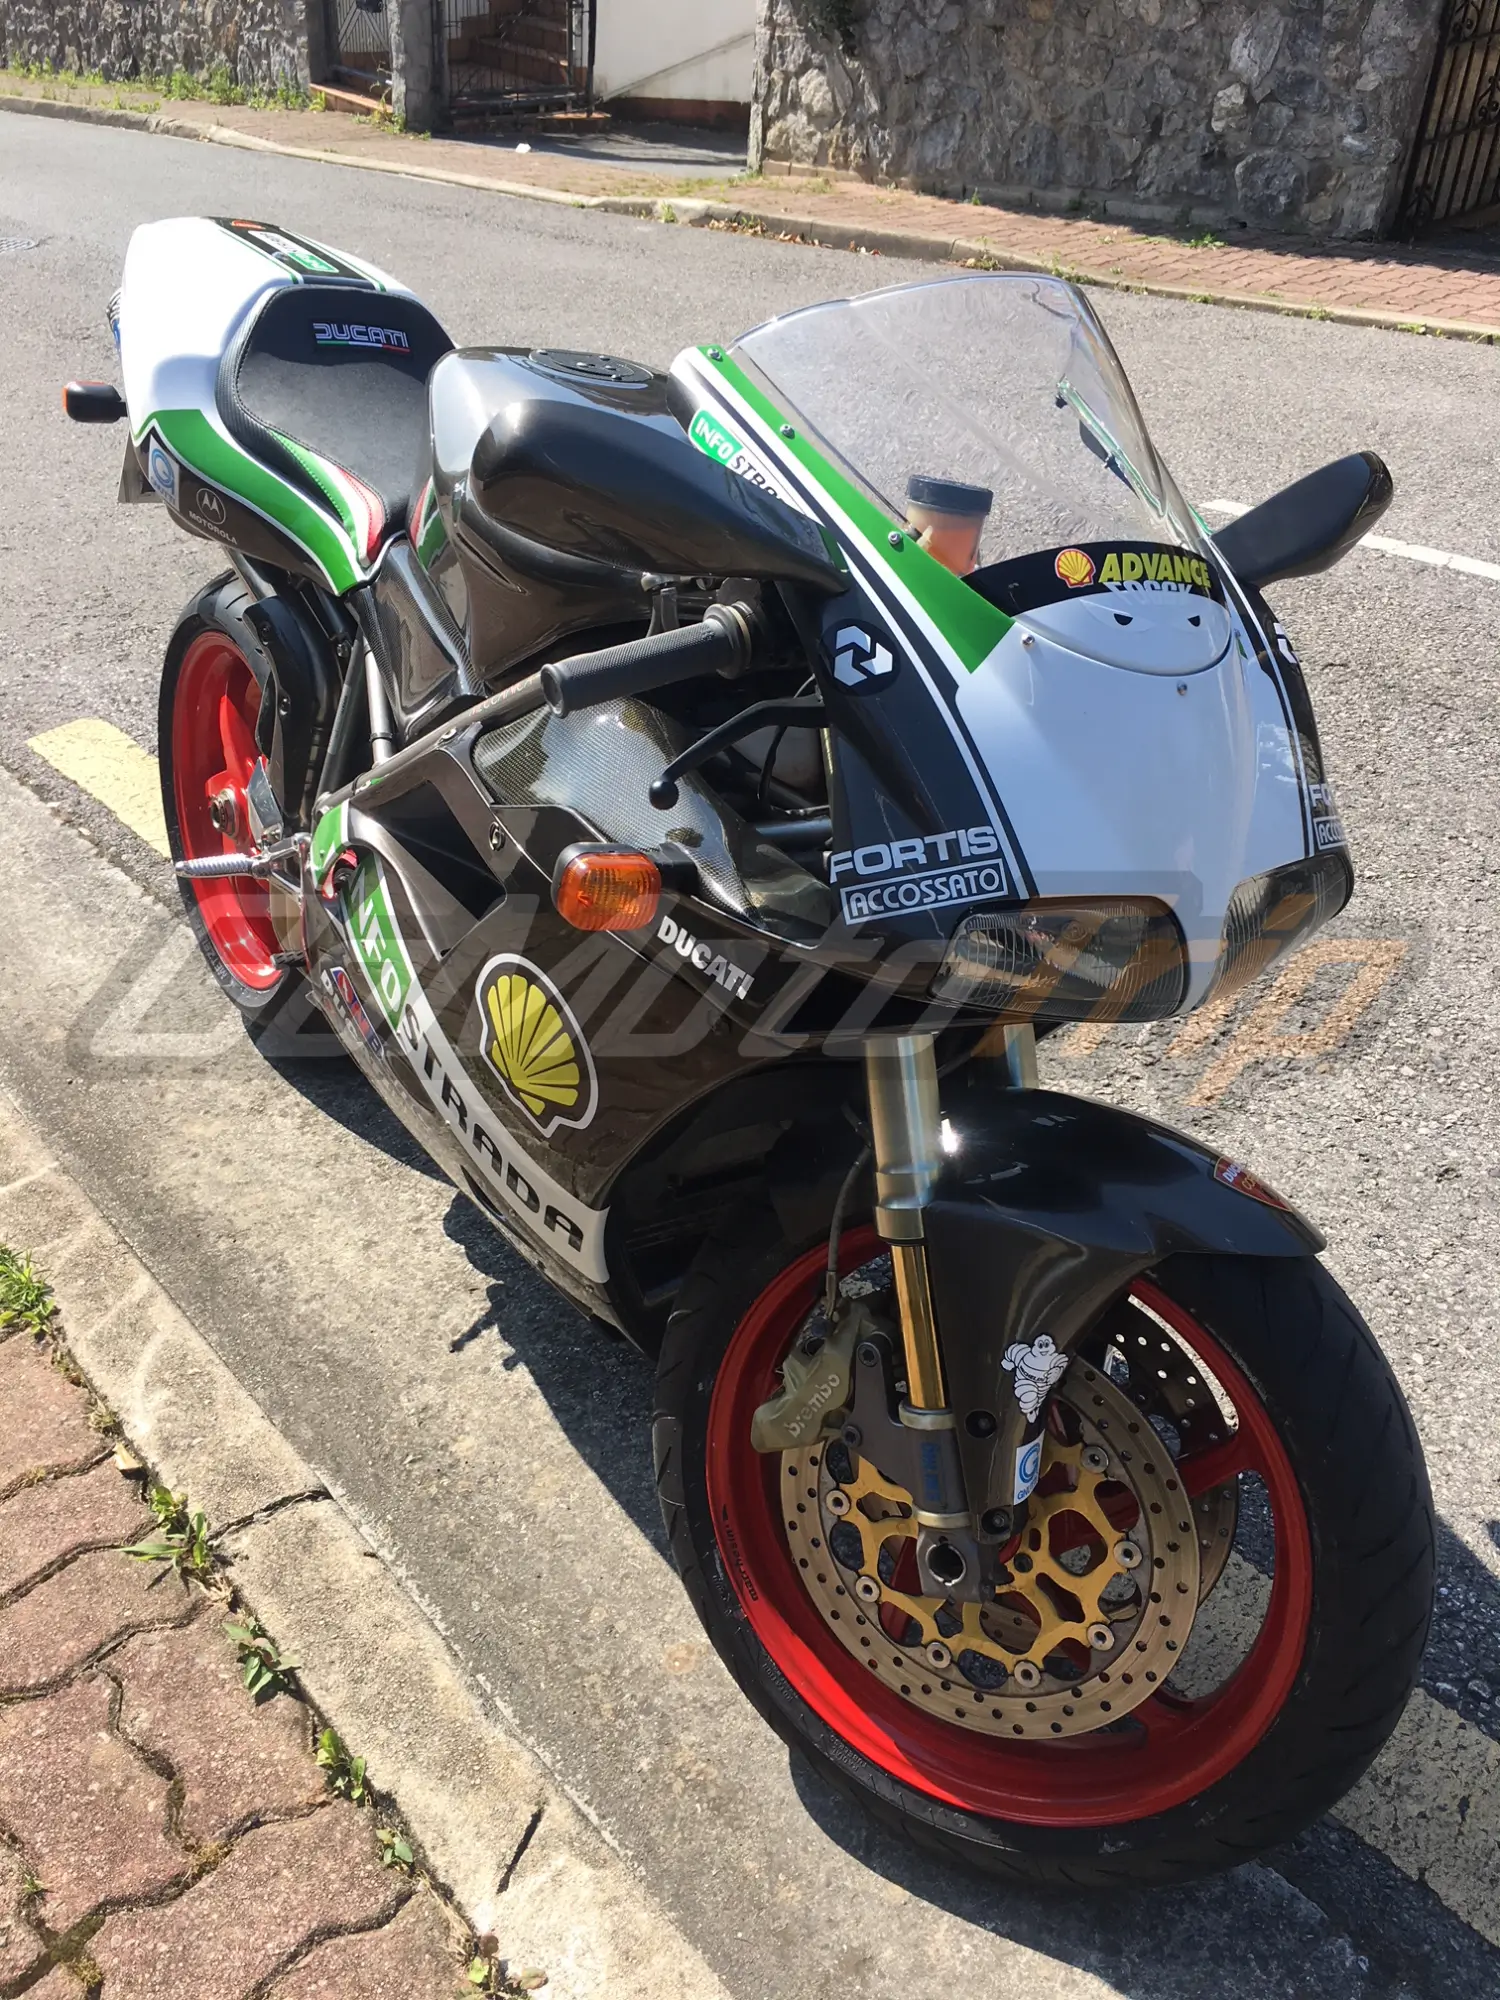 Rider-Review-Efren-Ducati-748-916-996-998-Gray-WSBK-Fairing-3